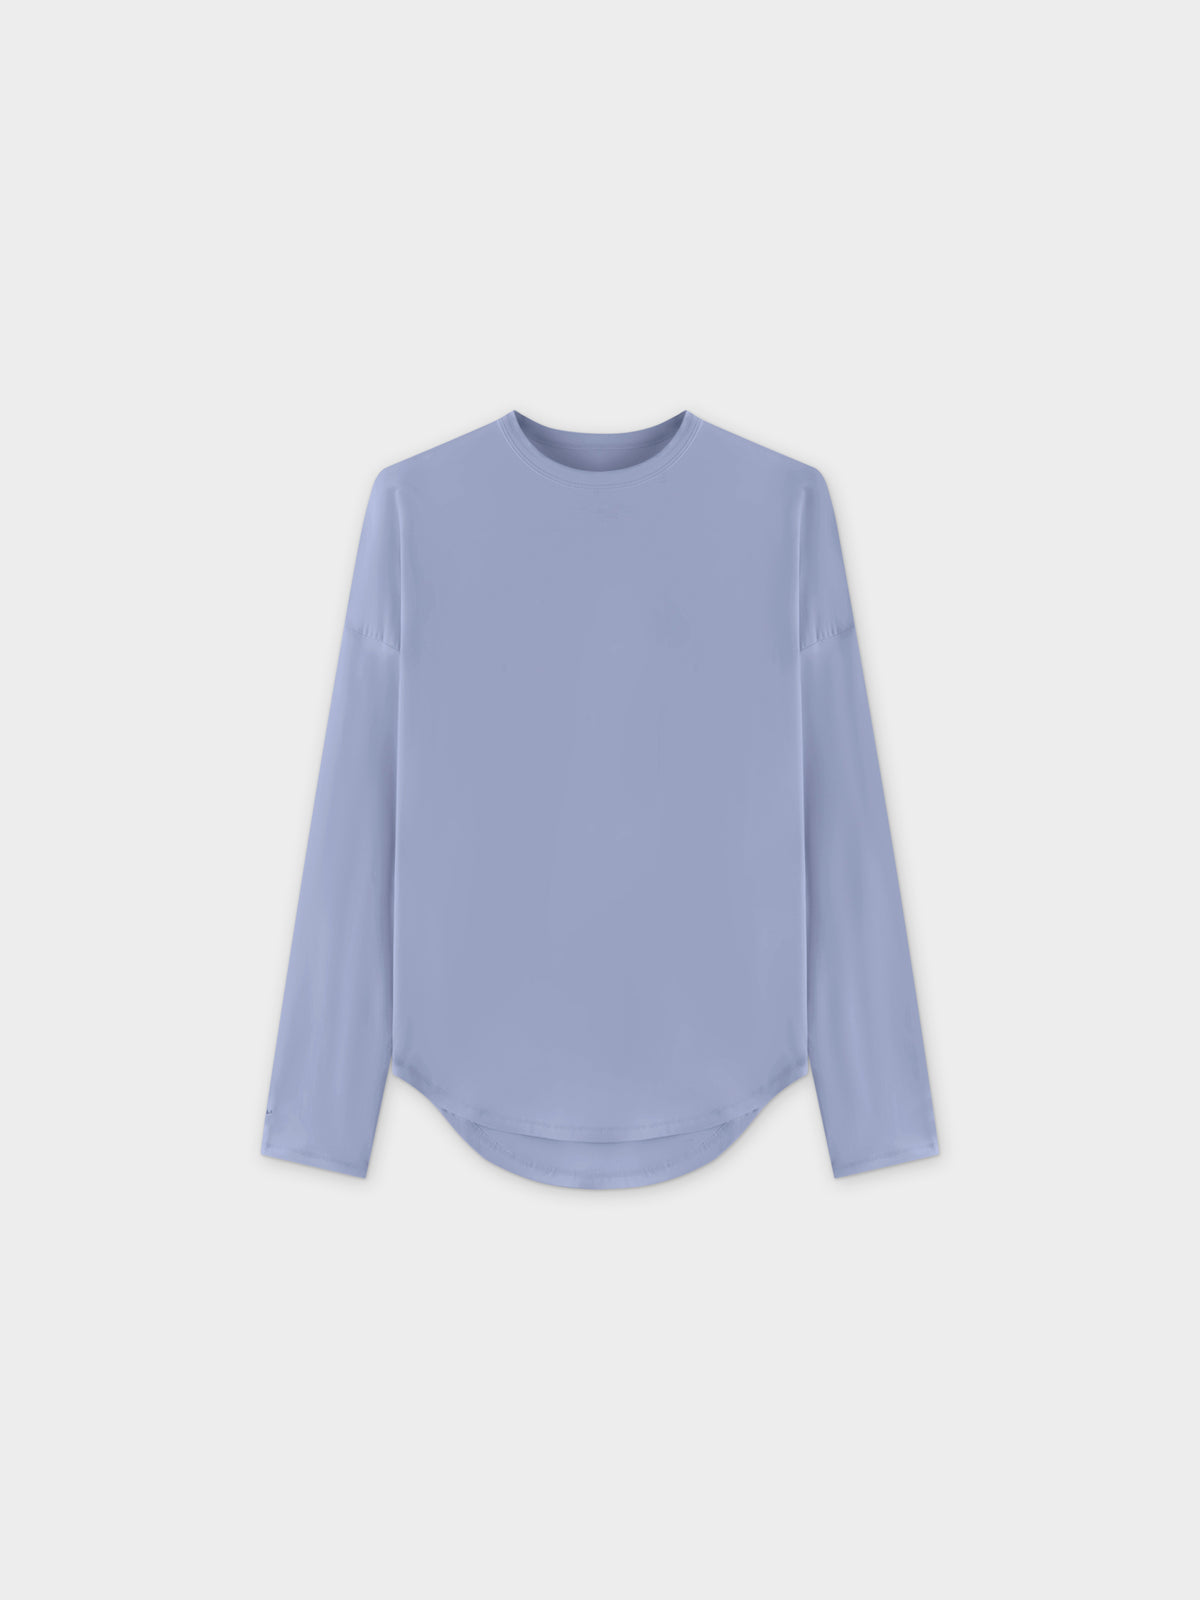 Camiseta Swing LS-Azul claro